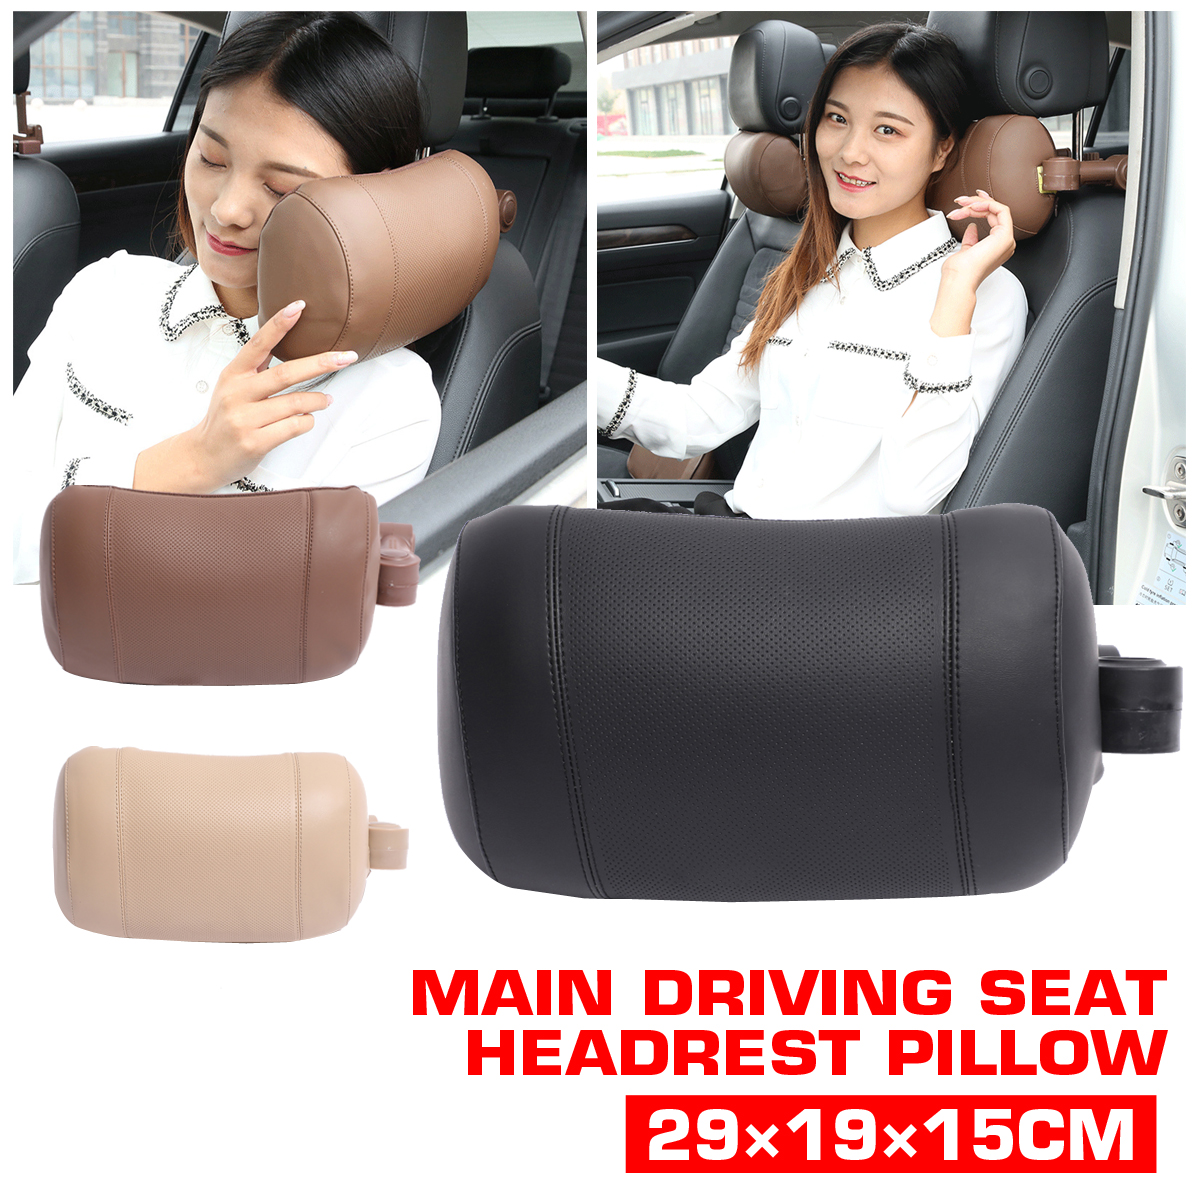 291915cm-Cervical-Multifunctional-Child-Adult-Travel-Car-Left-Seat-PU-Leather-U-shaped-Neck-Pillow-H-1785303-1